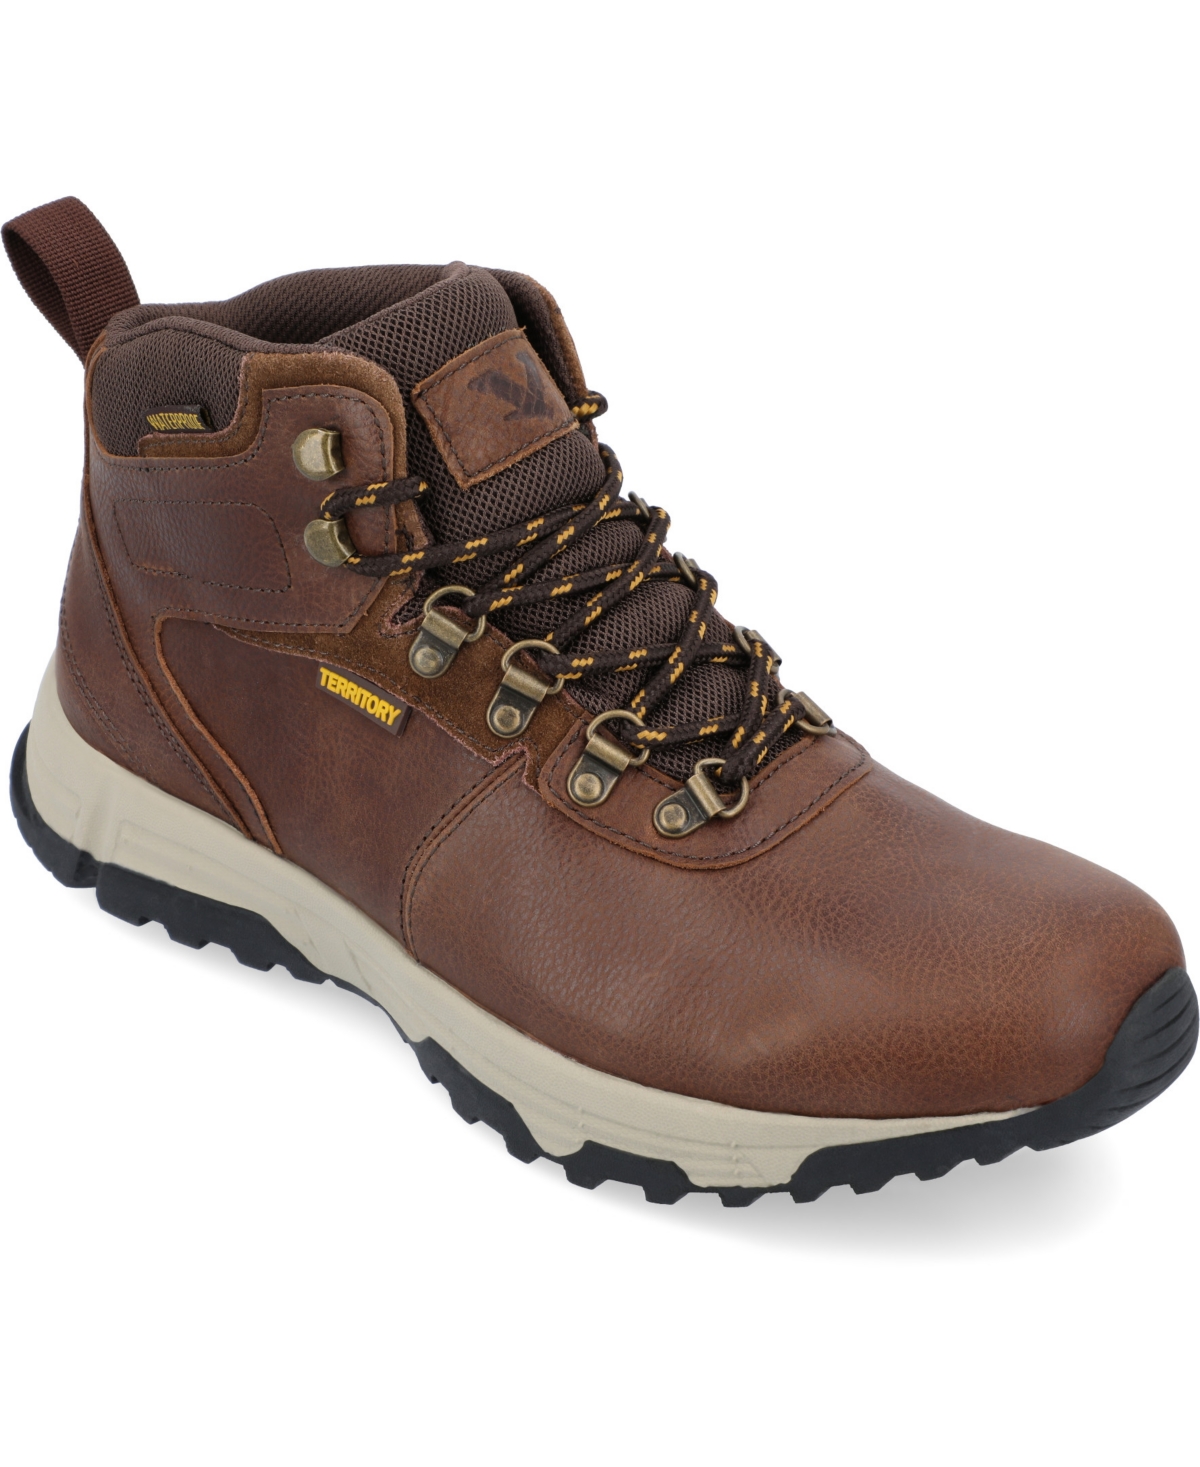 Men's Narrows Tru Comfort Foam Lace-Up Water Resistant Hiking Boots - Brown